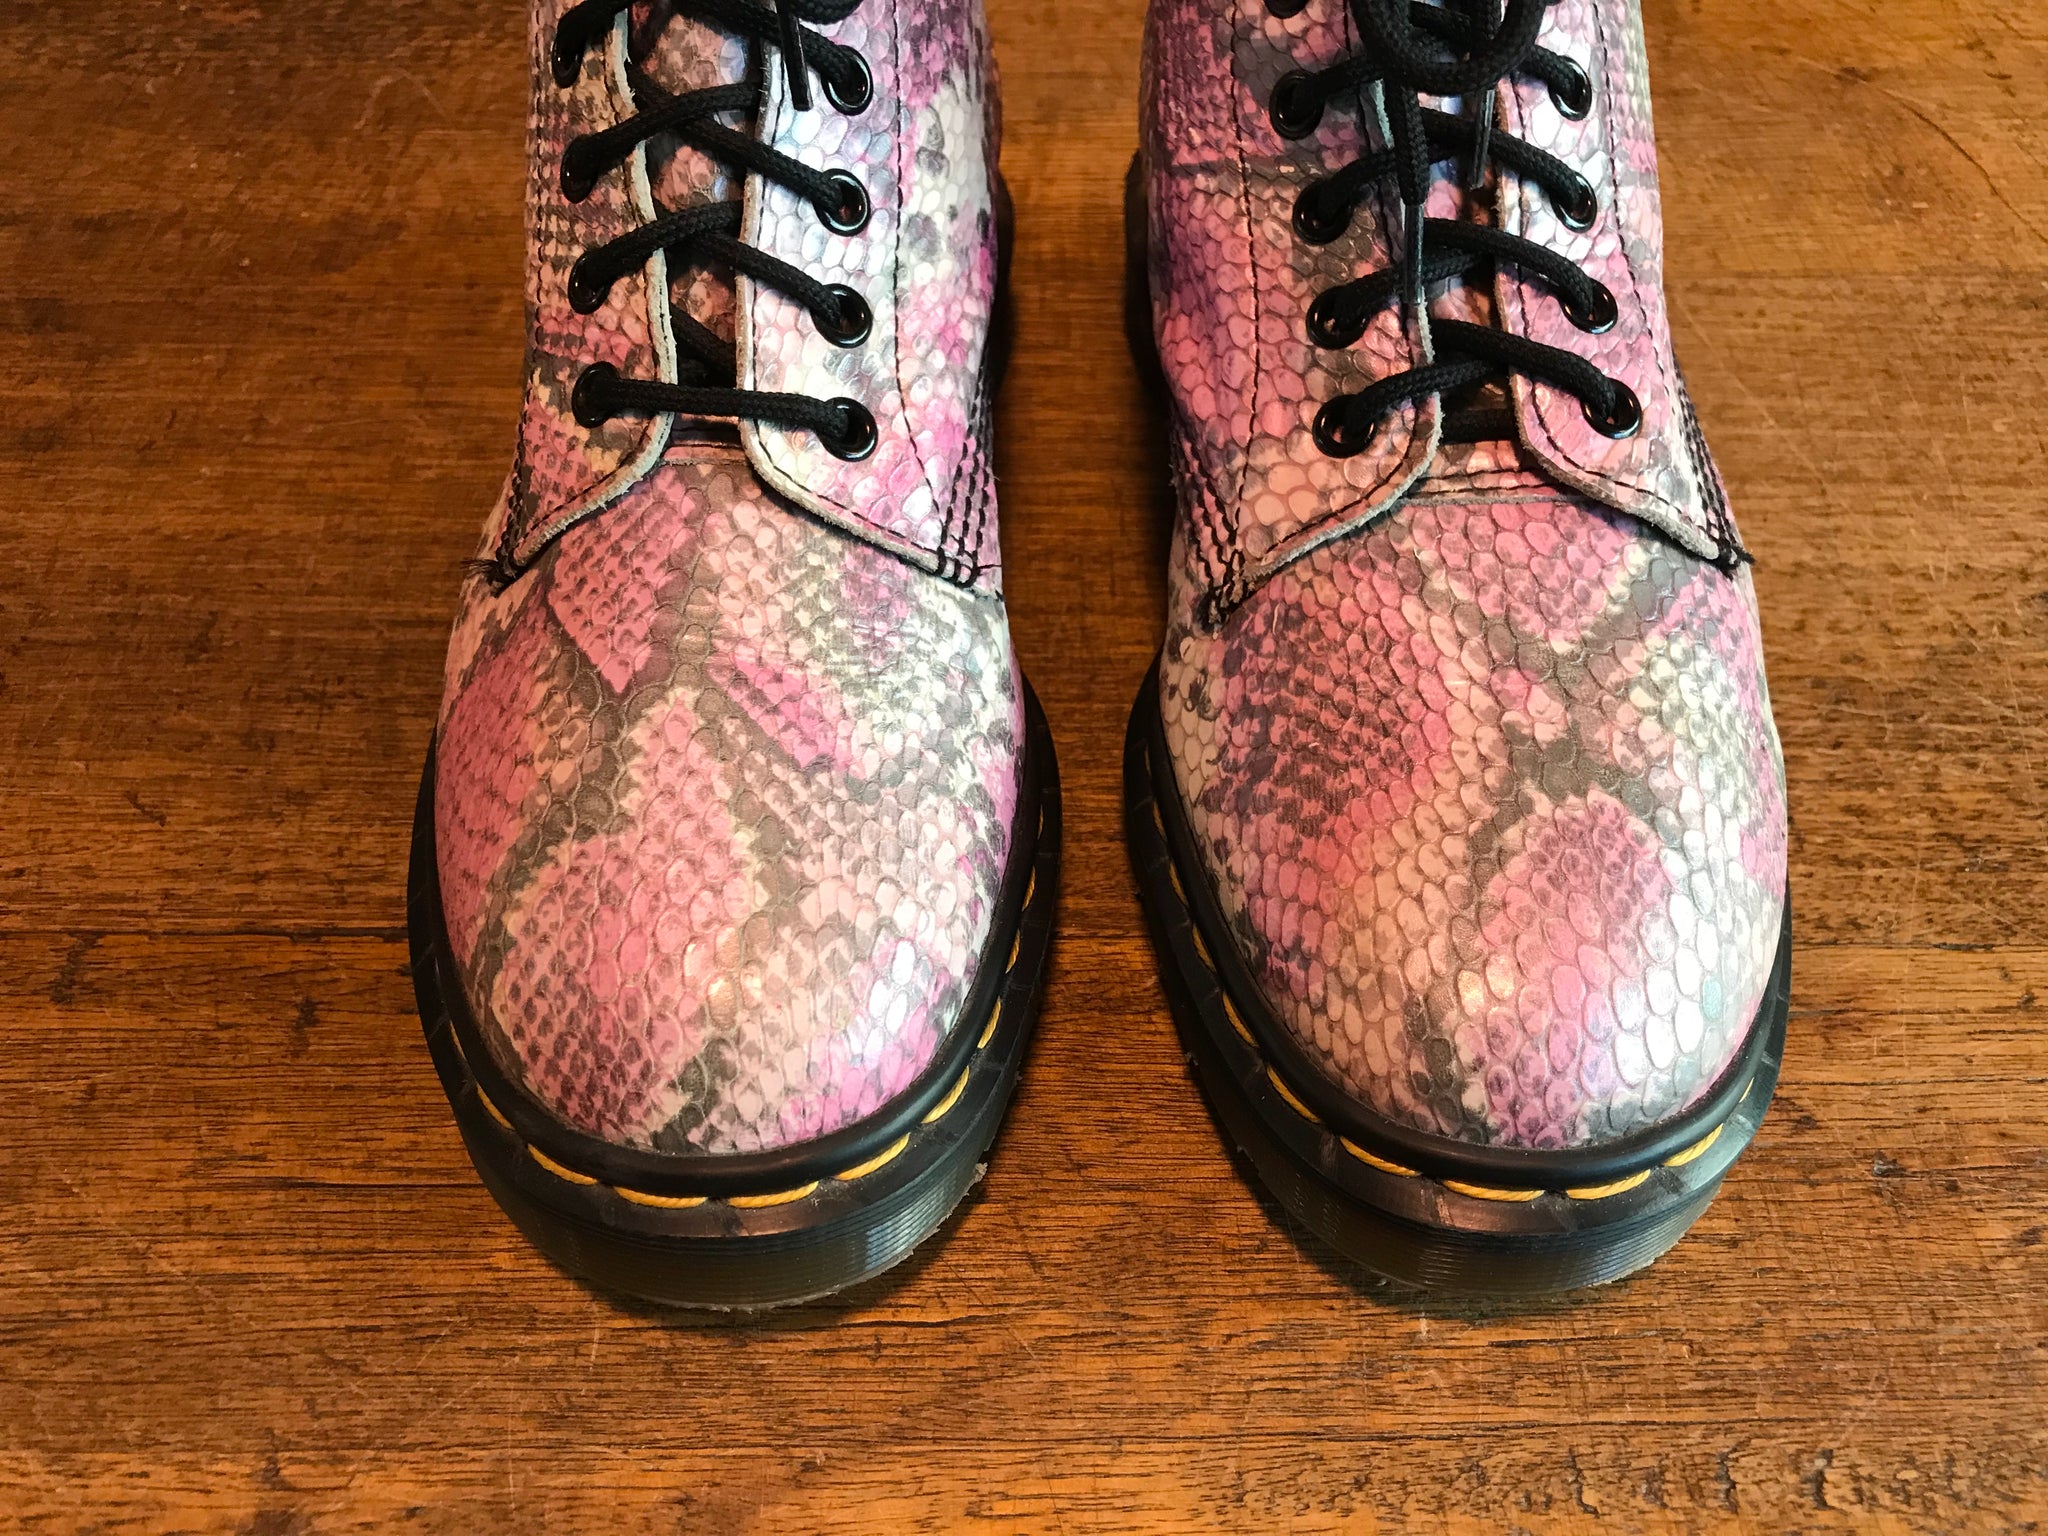 Dr Martens Rare Vintage Pink Snakeskin Women’s Boots Size UK 6.5 Made in England